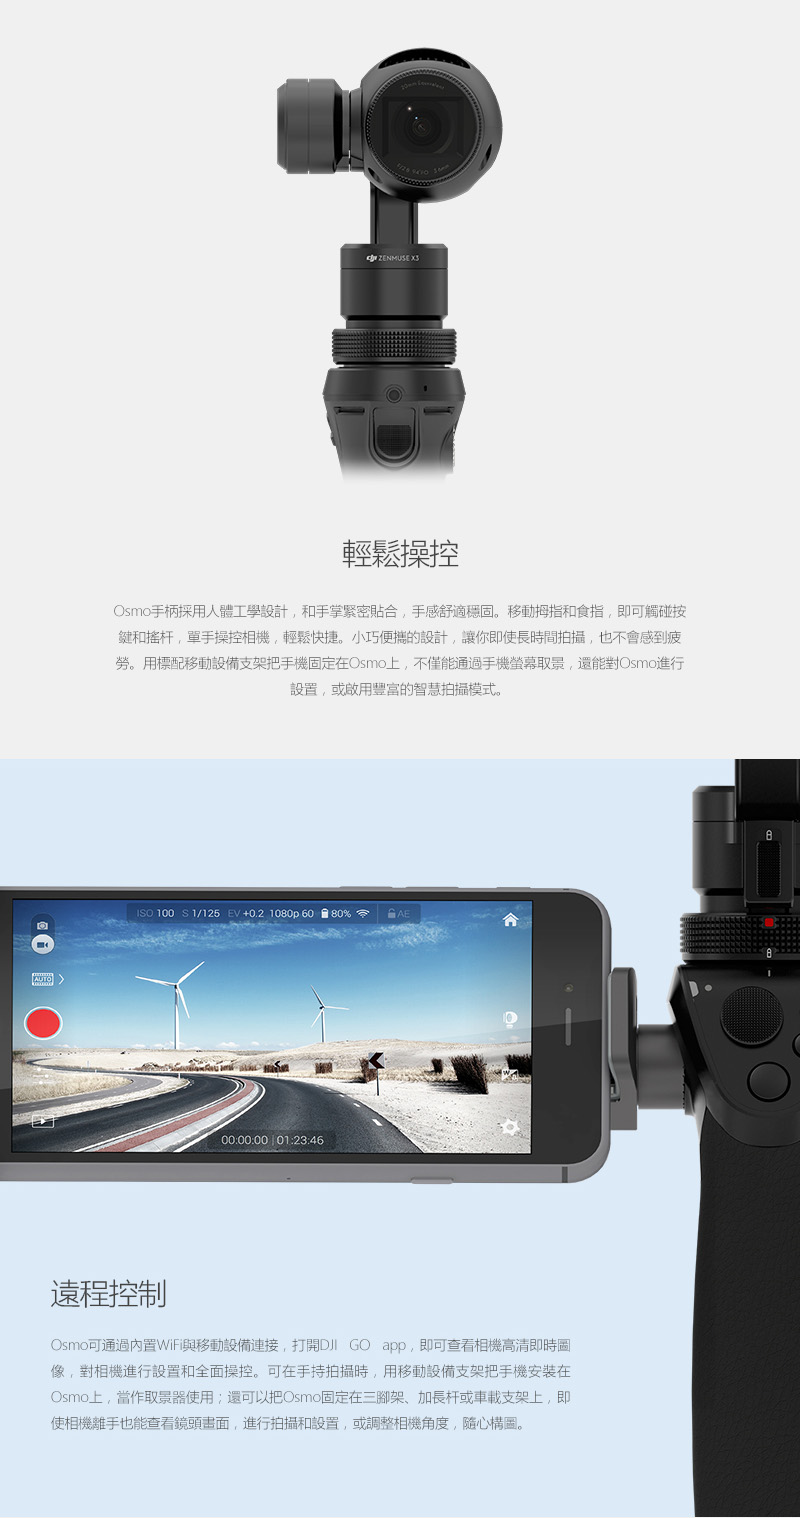  DJI OSMO 4K高清三軸穩定器雲台相機- Outlet Express HK生活百貨城